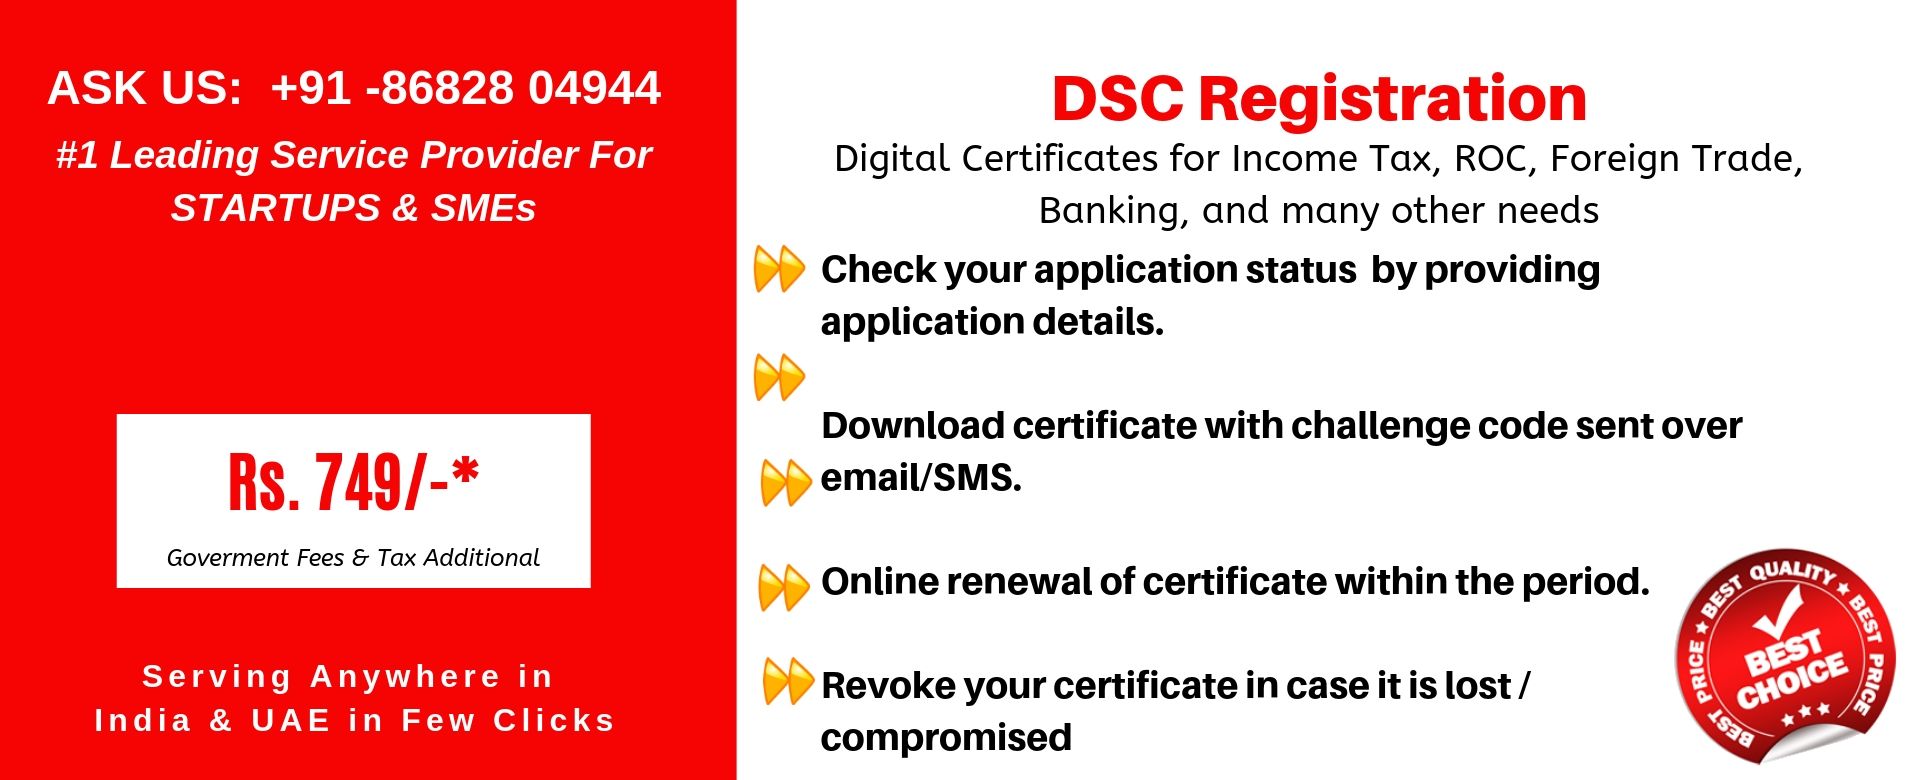 dsc registration in india